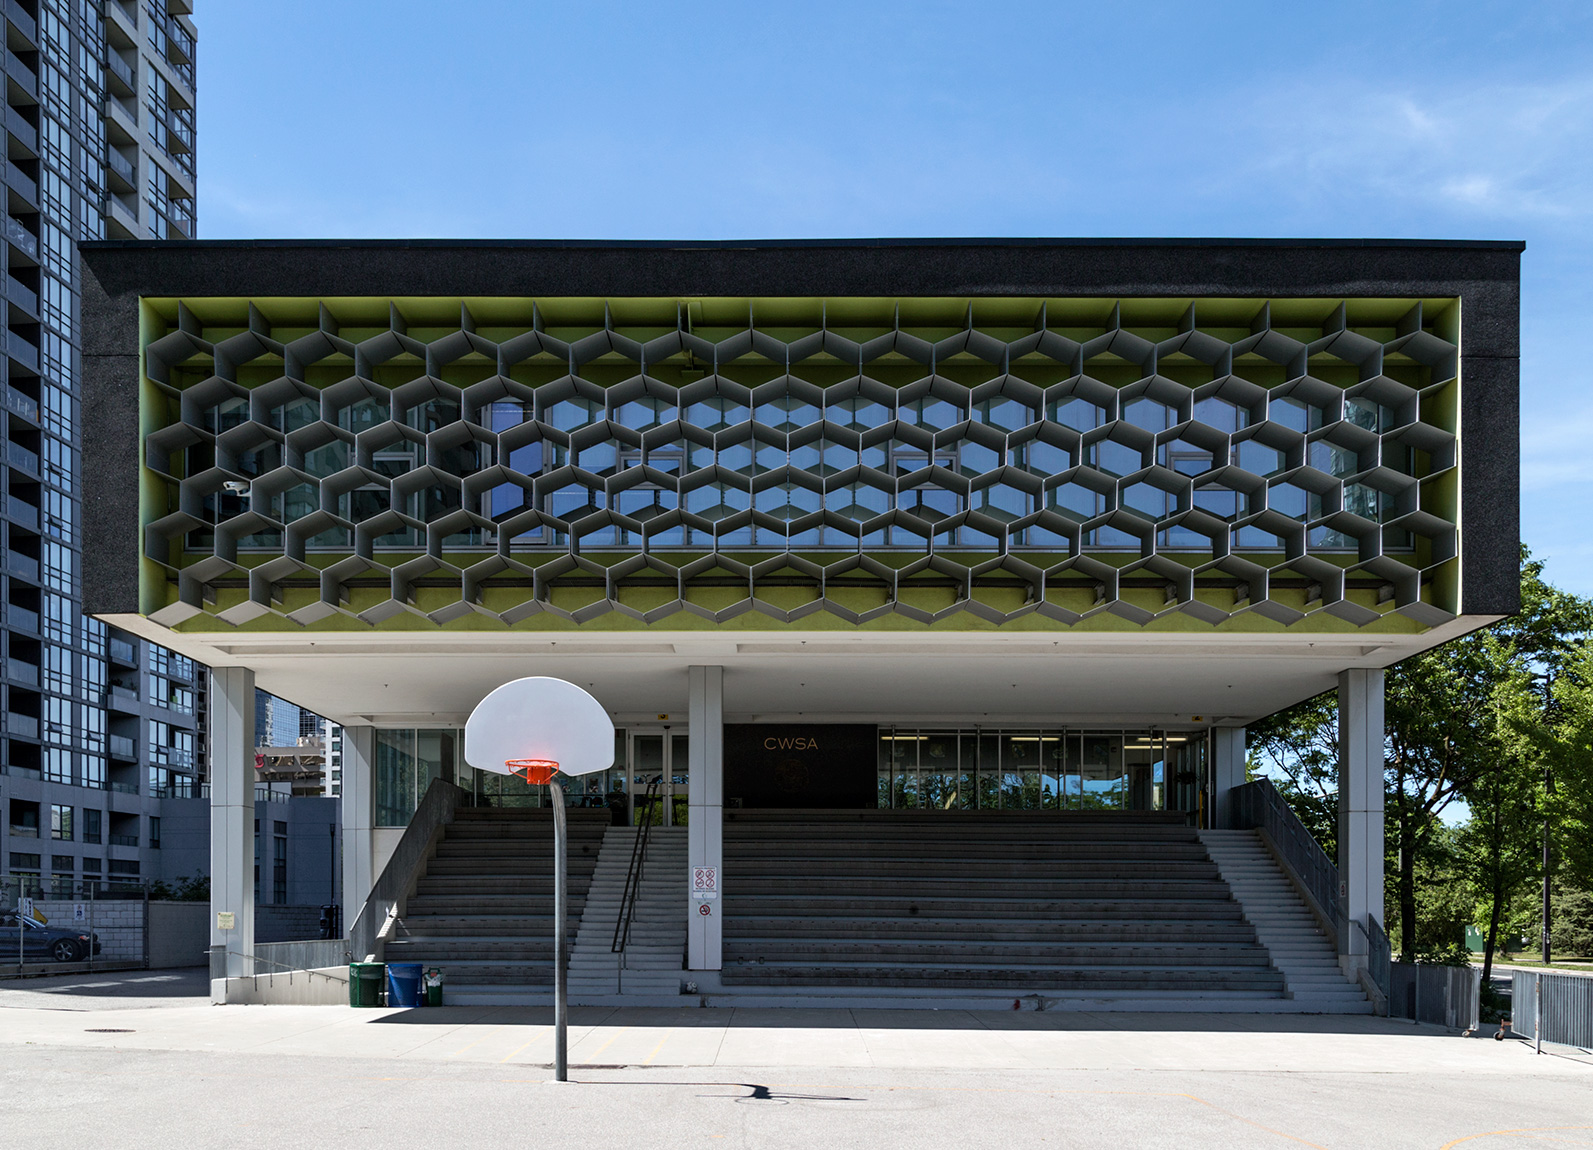 20160606. The Claude Watson School of the Arts honeycomb facade